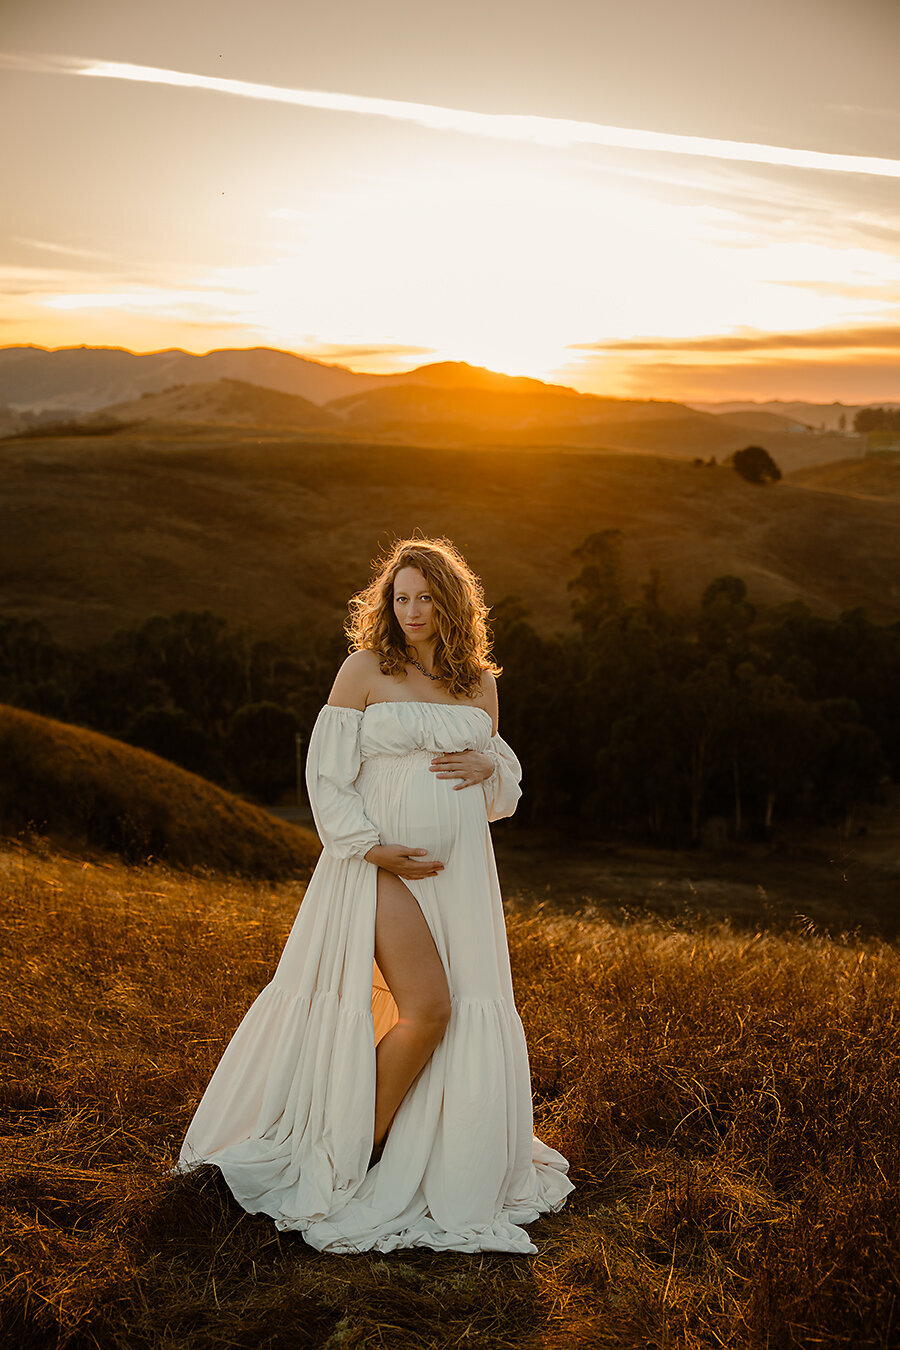 Petaluma-Santa Rosa-Windsor-Sonoma County Maternity Photographer-Michelle DeMoss Photography